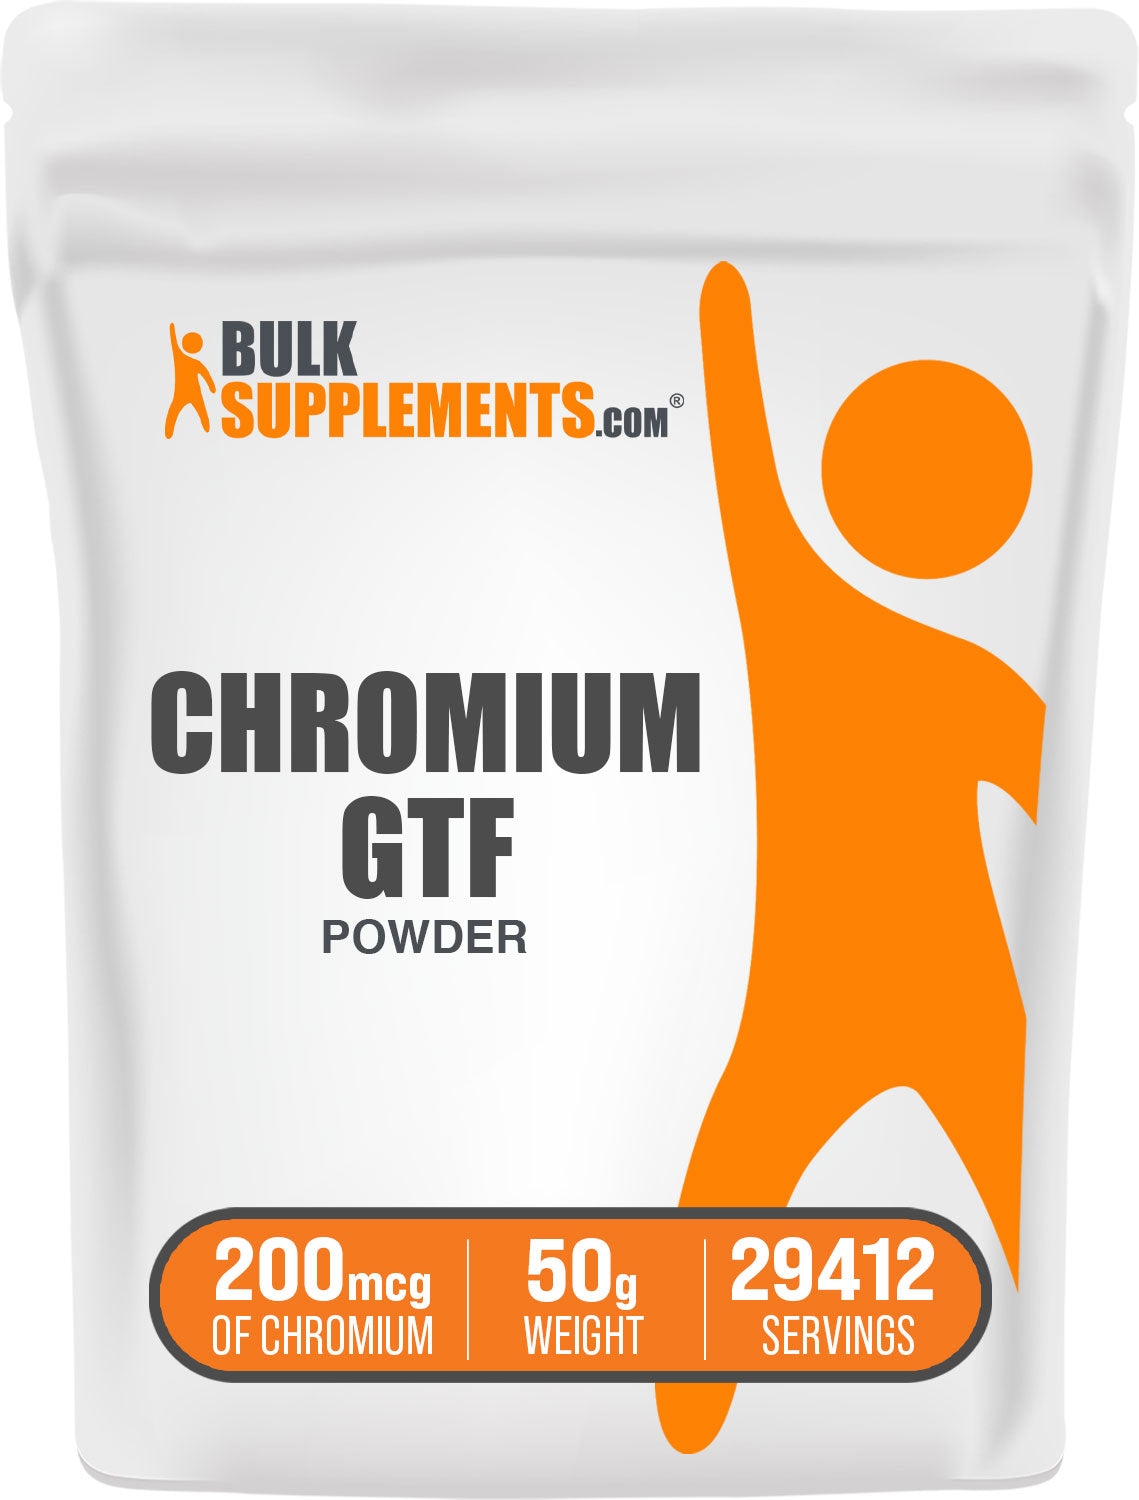 BulkSupplements.com Chromium GTF powder 50g bag